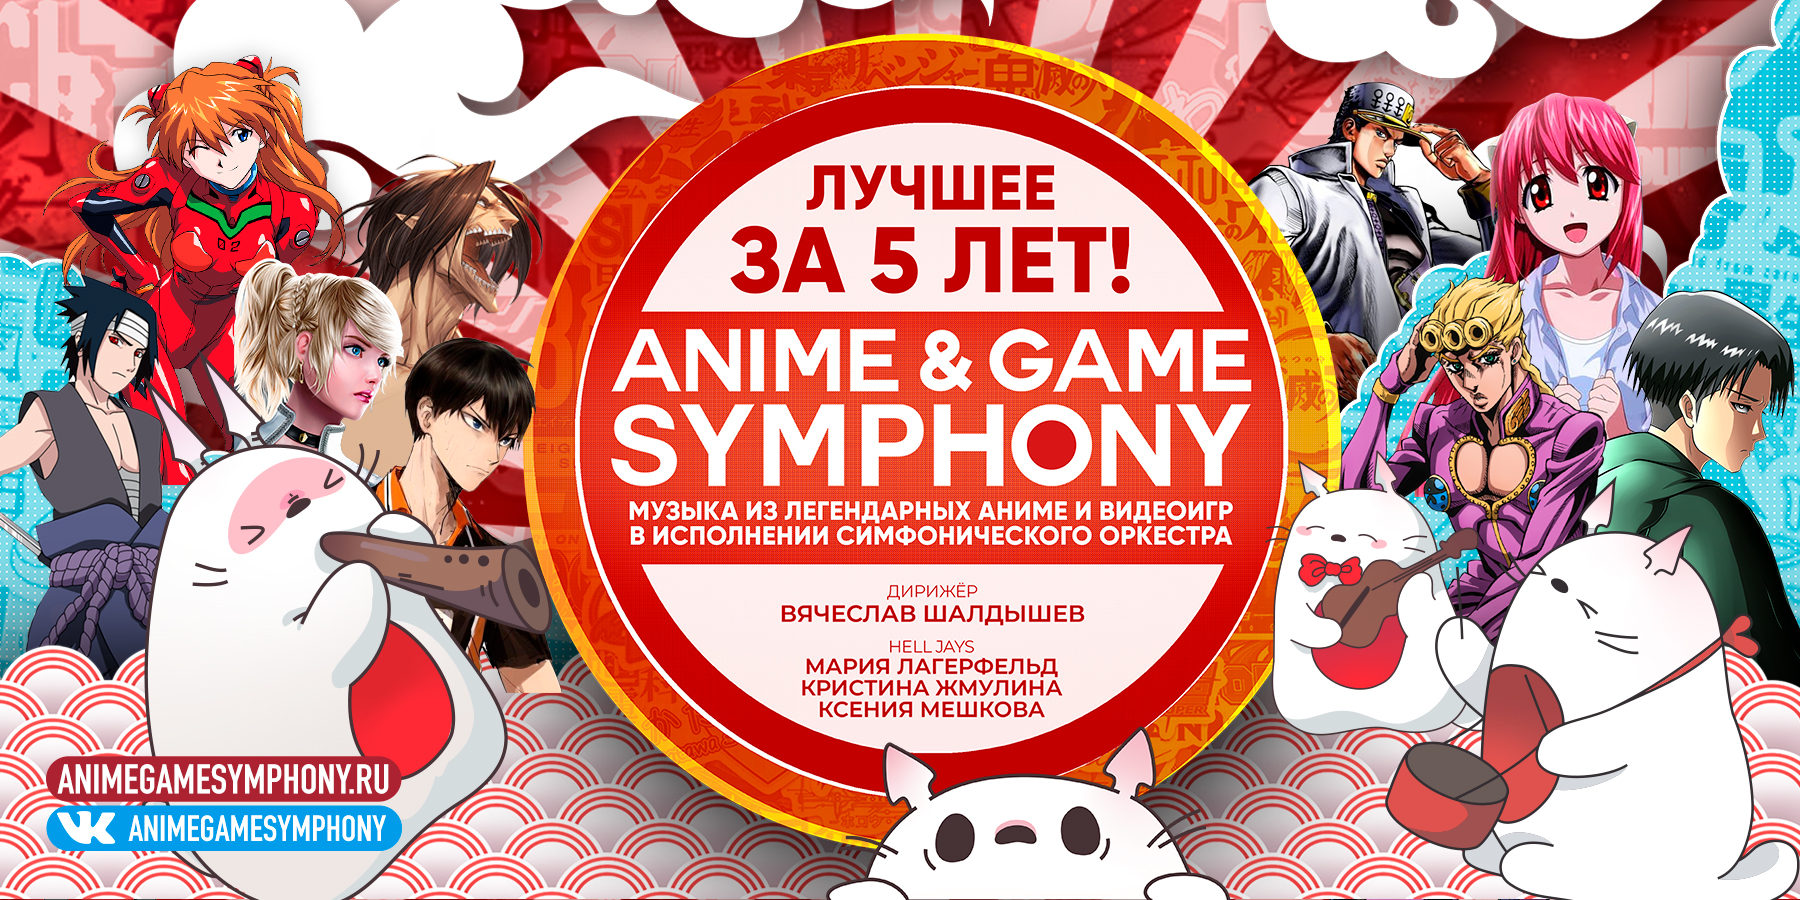 Anime &Game Symphony 24